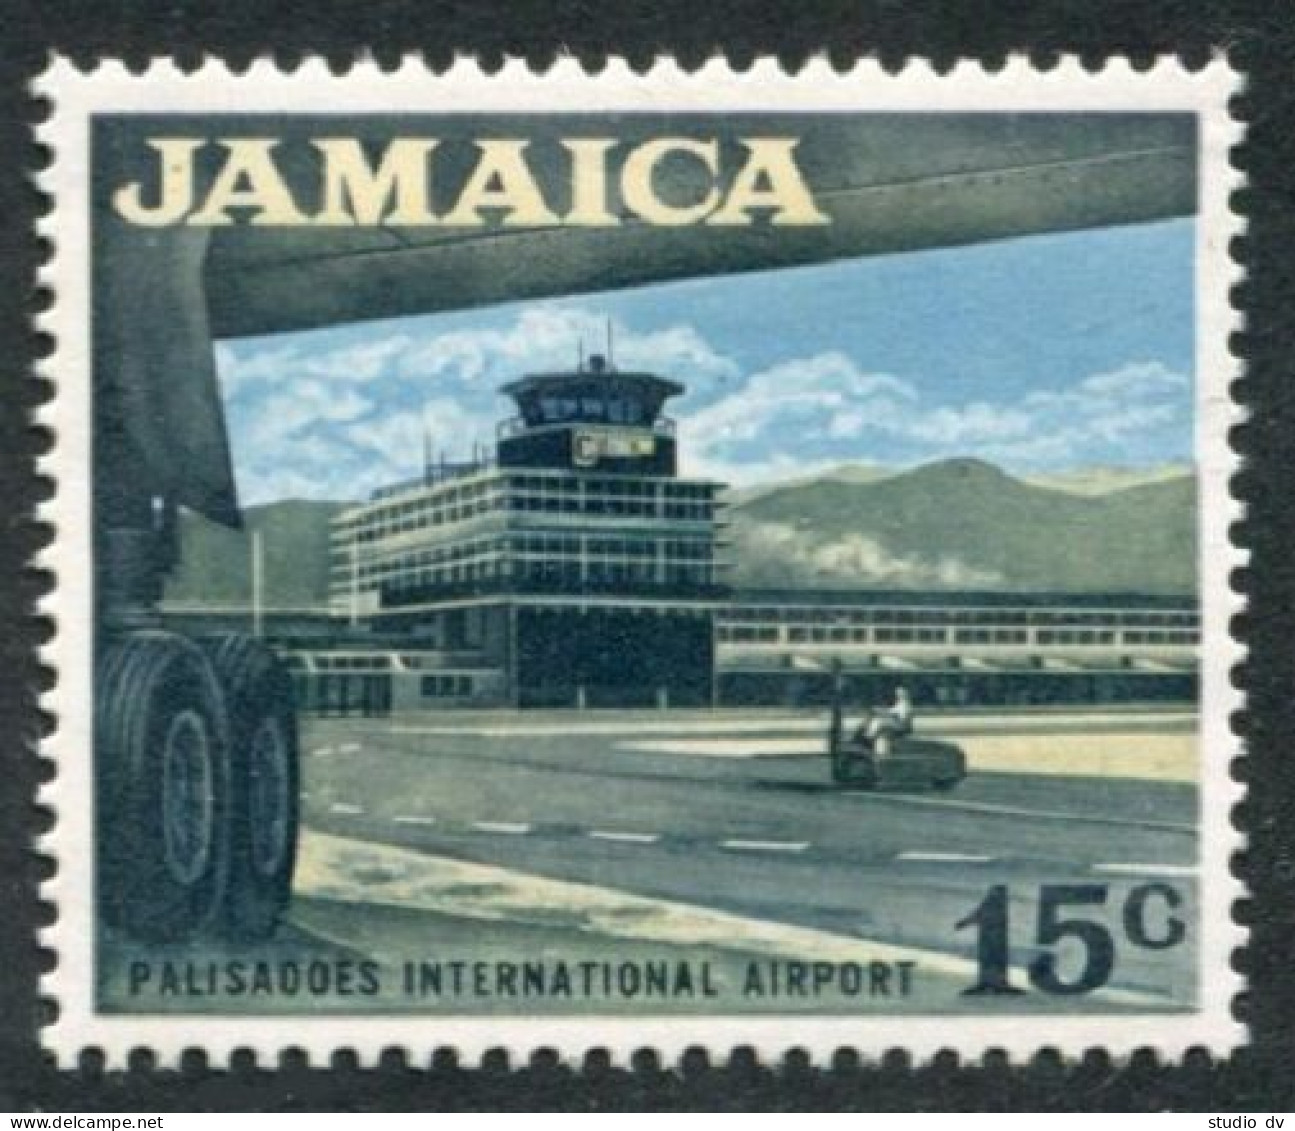 Jamaica 313,MNH.Michel 315. Palisadoes International Atrport,1970. - Jamaique (1962-...)